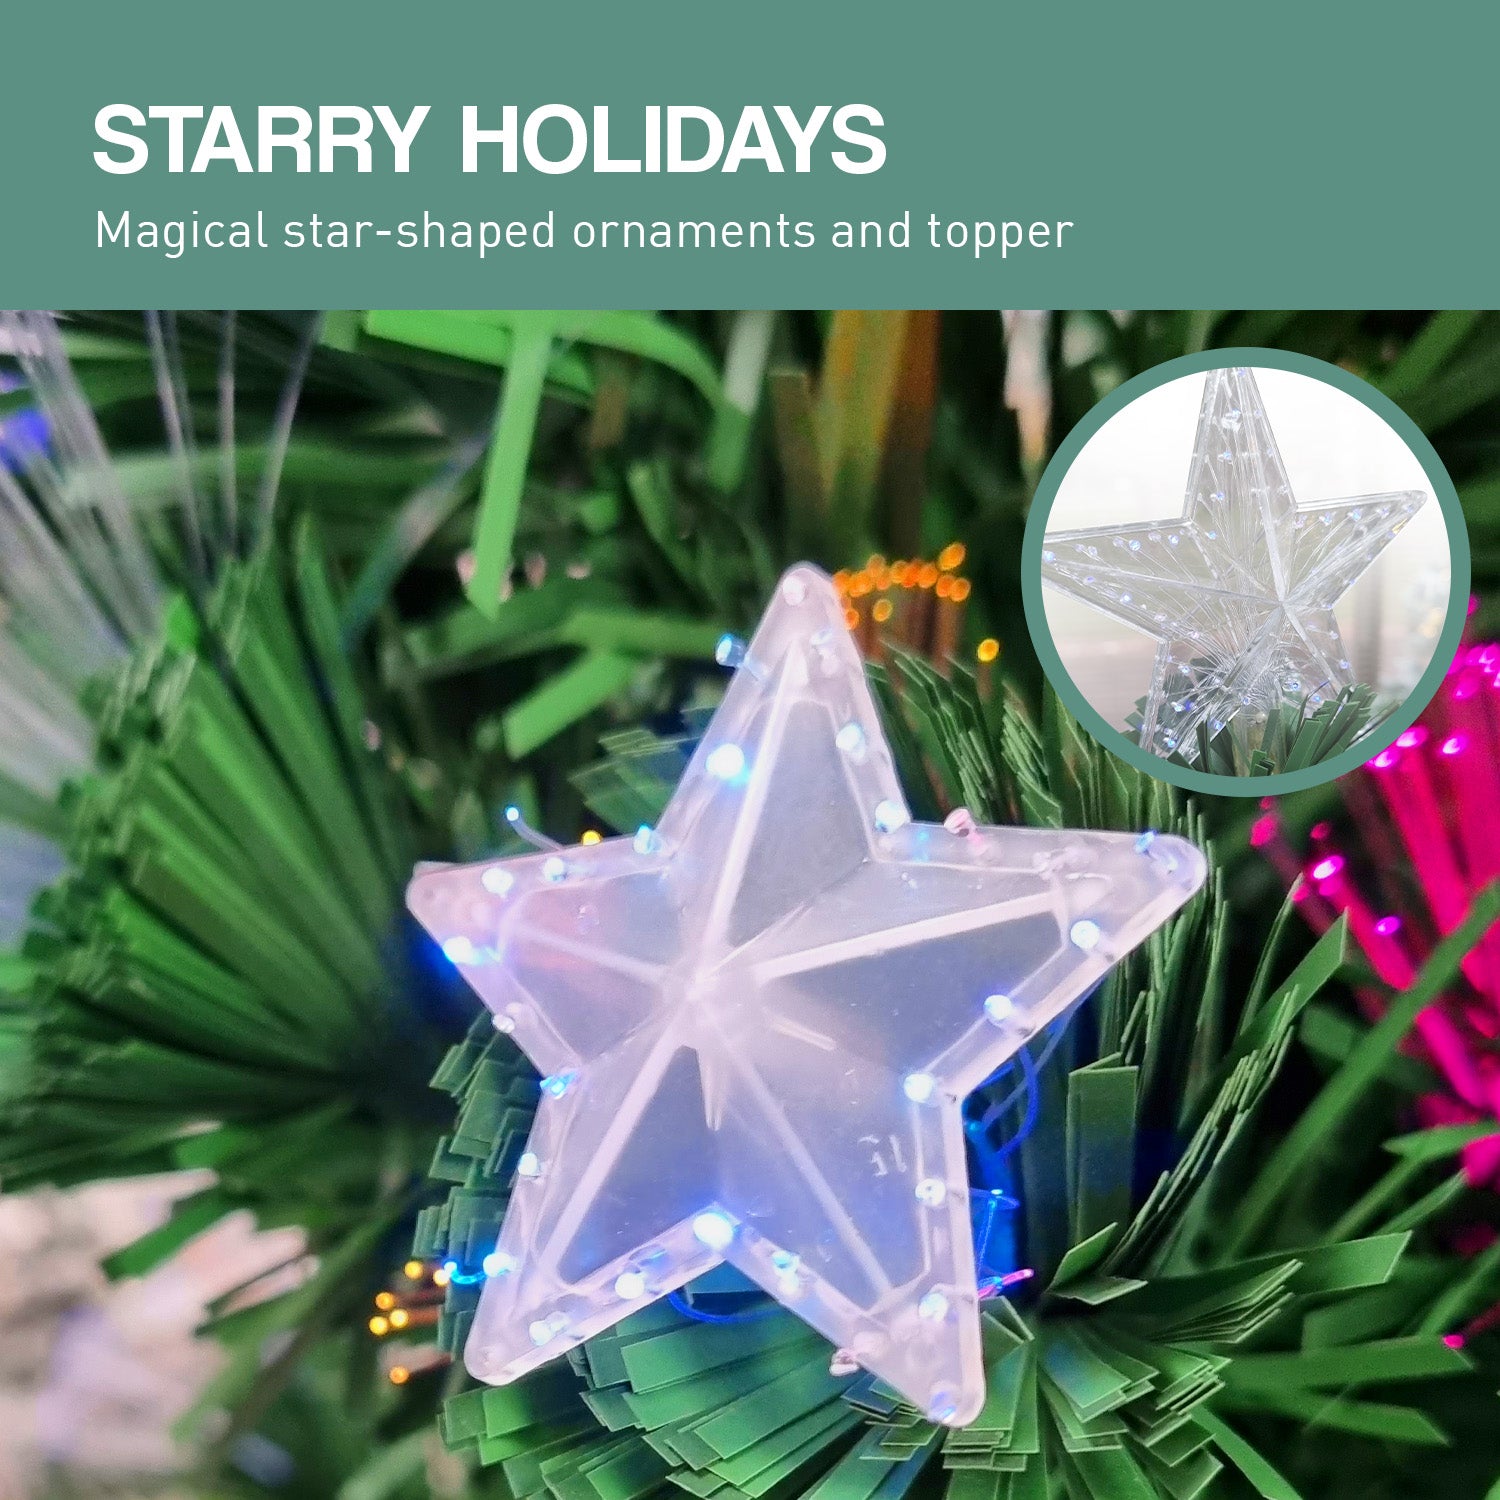 Christabelle 1.2m Enchanted Pre Lit Fibre Optic Christmas Tree Stars Xmas Decor - SILBERSHELL